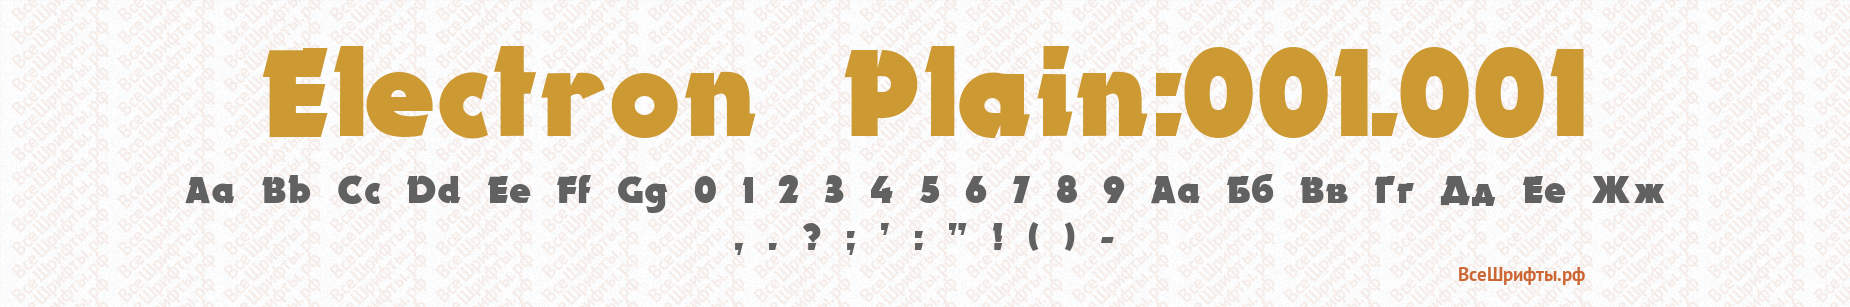 Шрифт Electron Plain:001.001